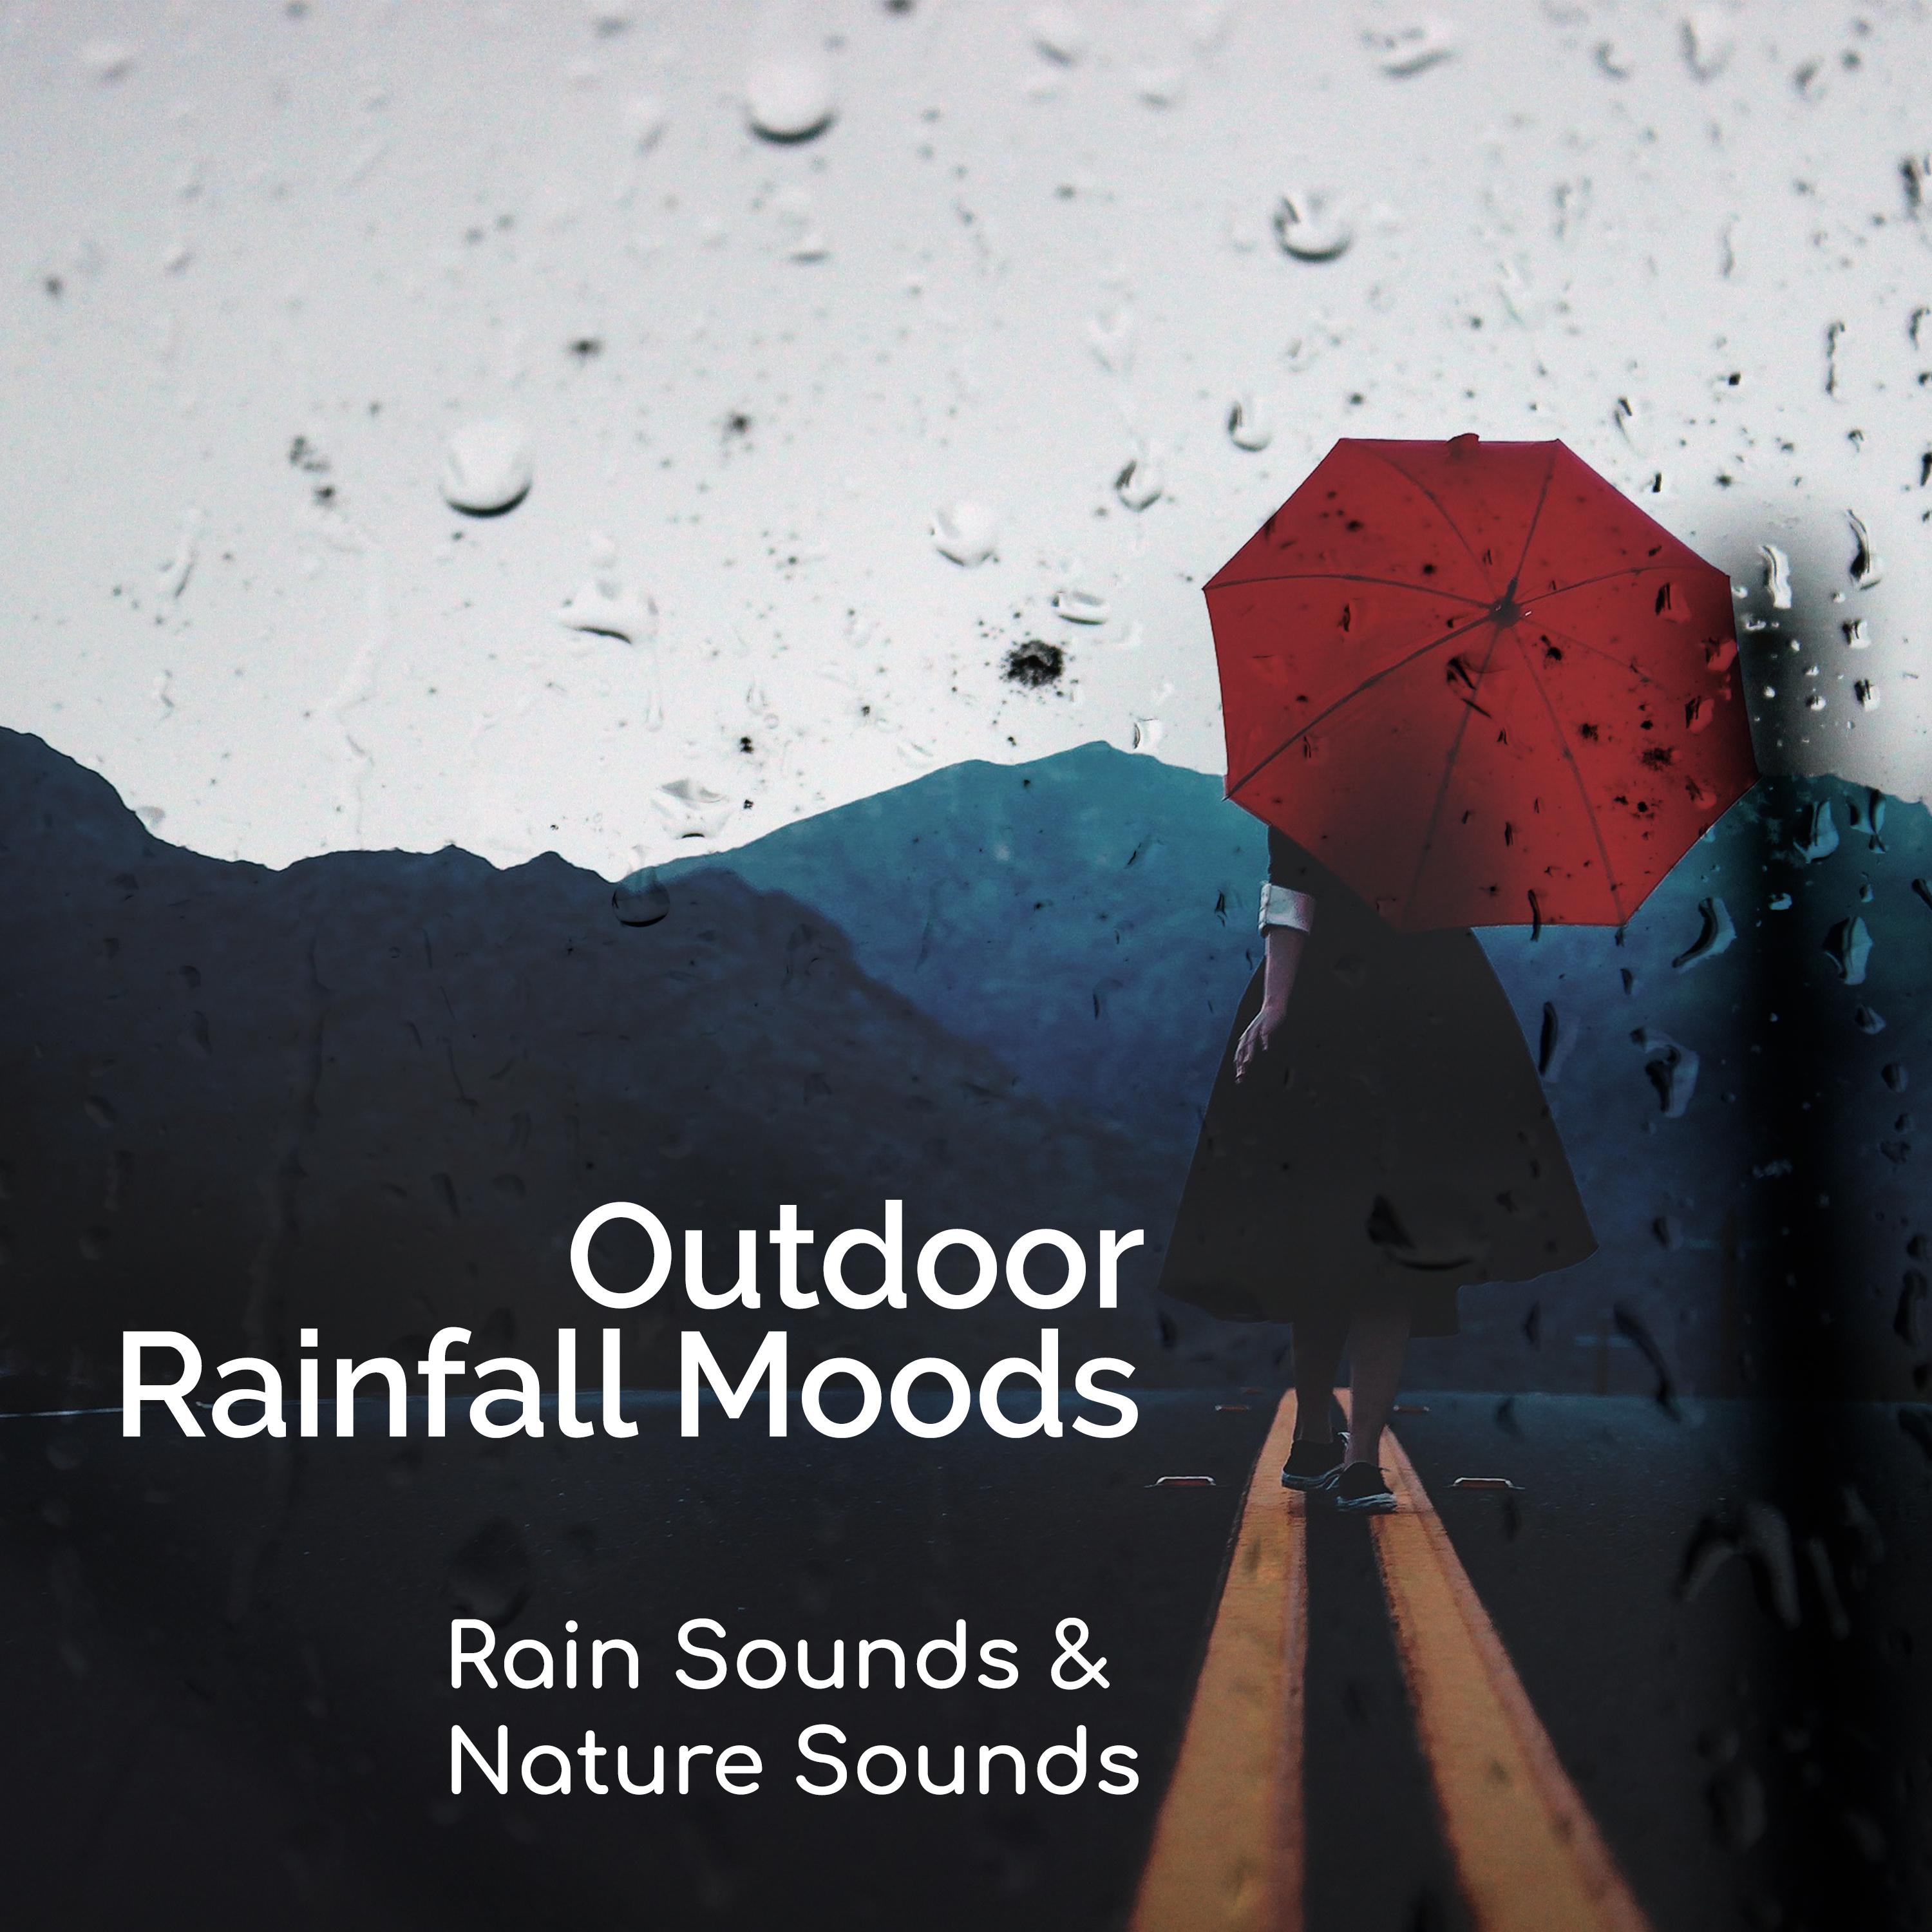 Outdoor Rainfall Moods